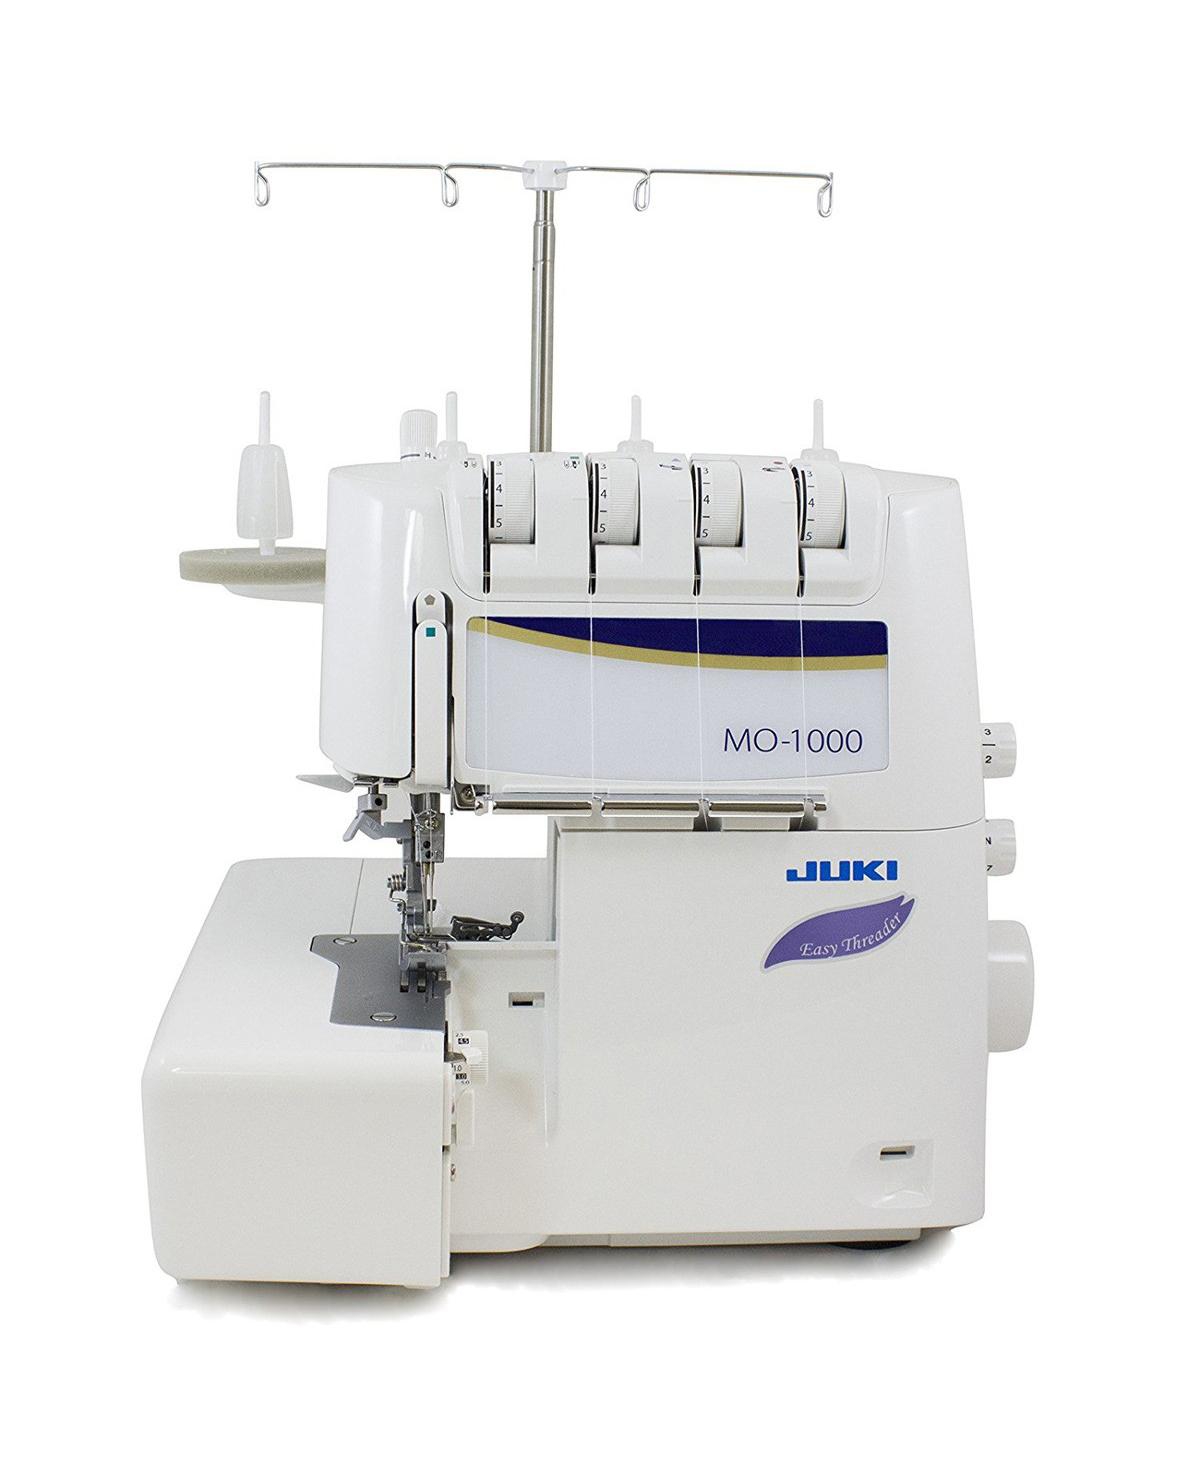 Mo-1000 2/3/4 Air Threading Overlock Serger Sewing Machine - White